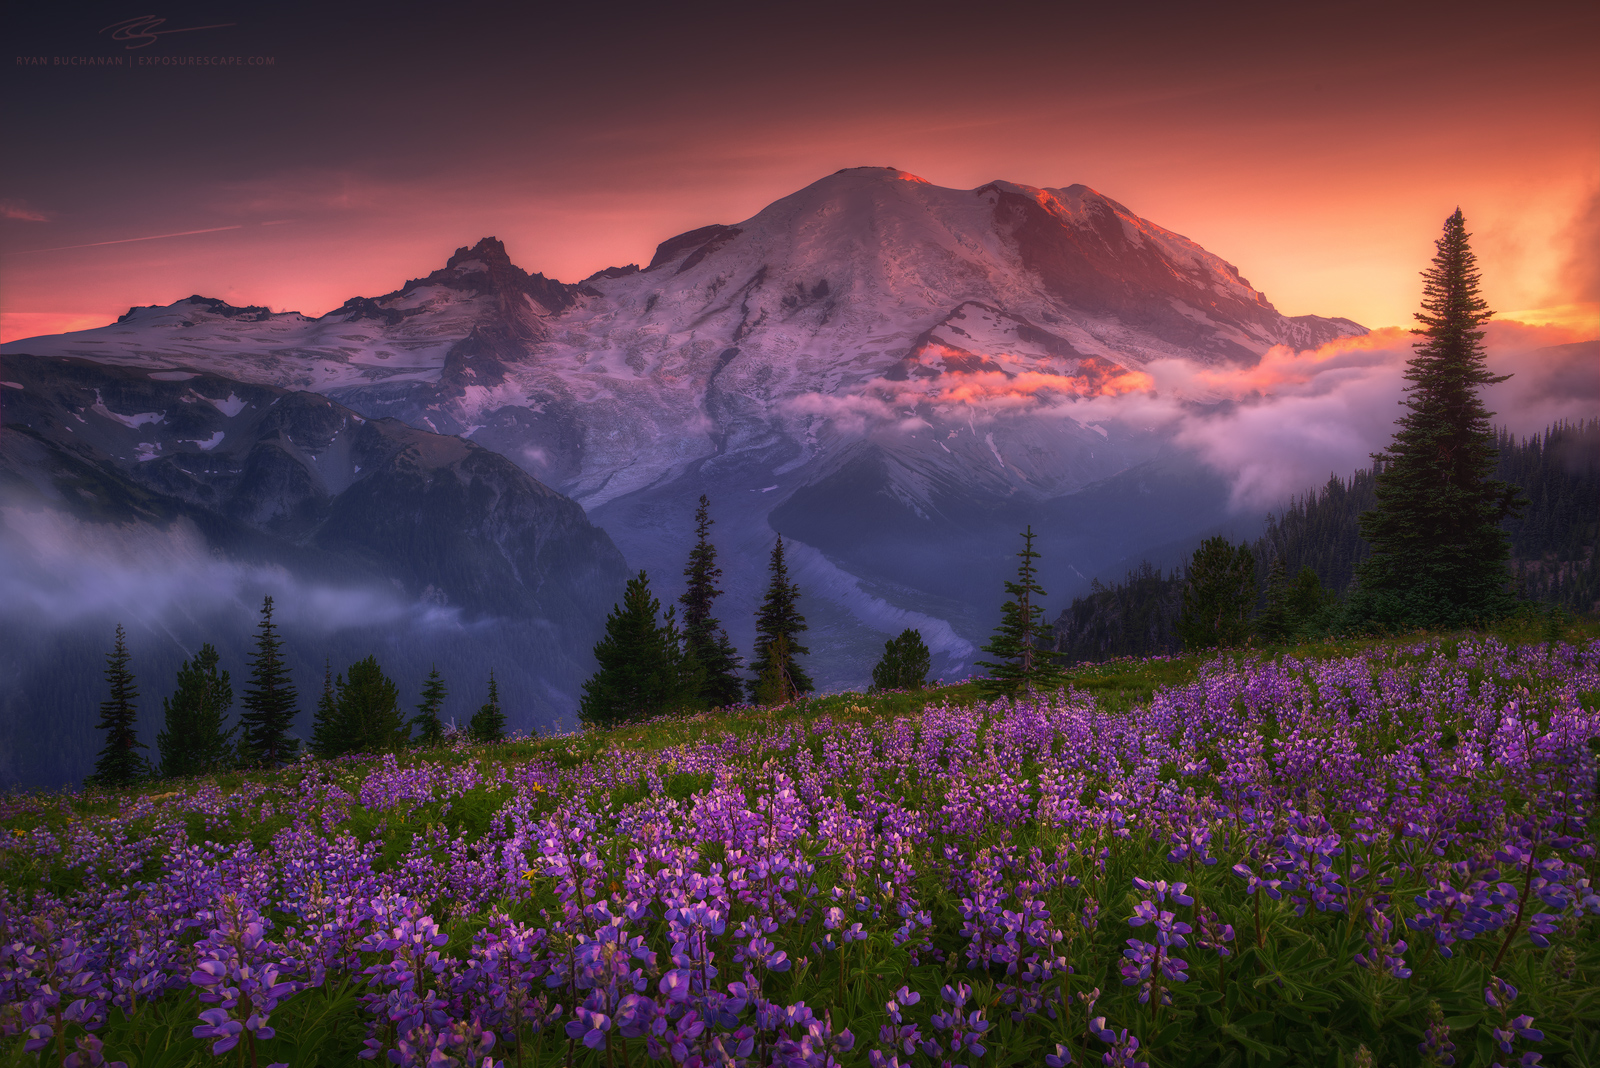 Sunrise, Mount Rainier at sunset during peak flower bloom